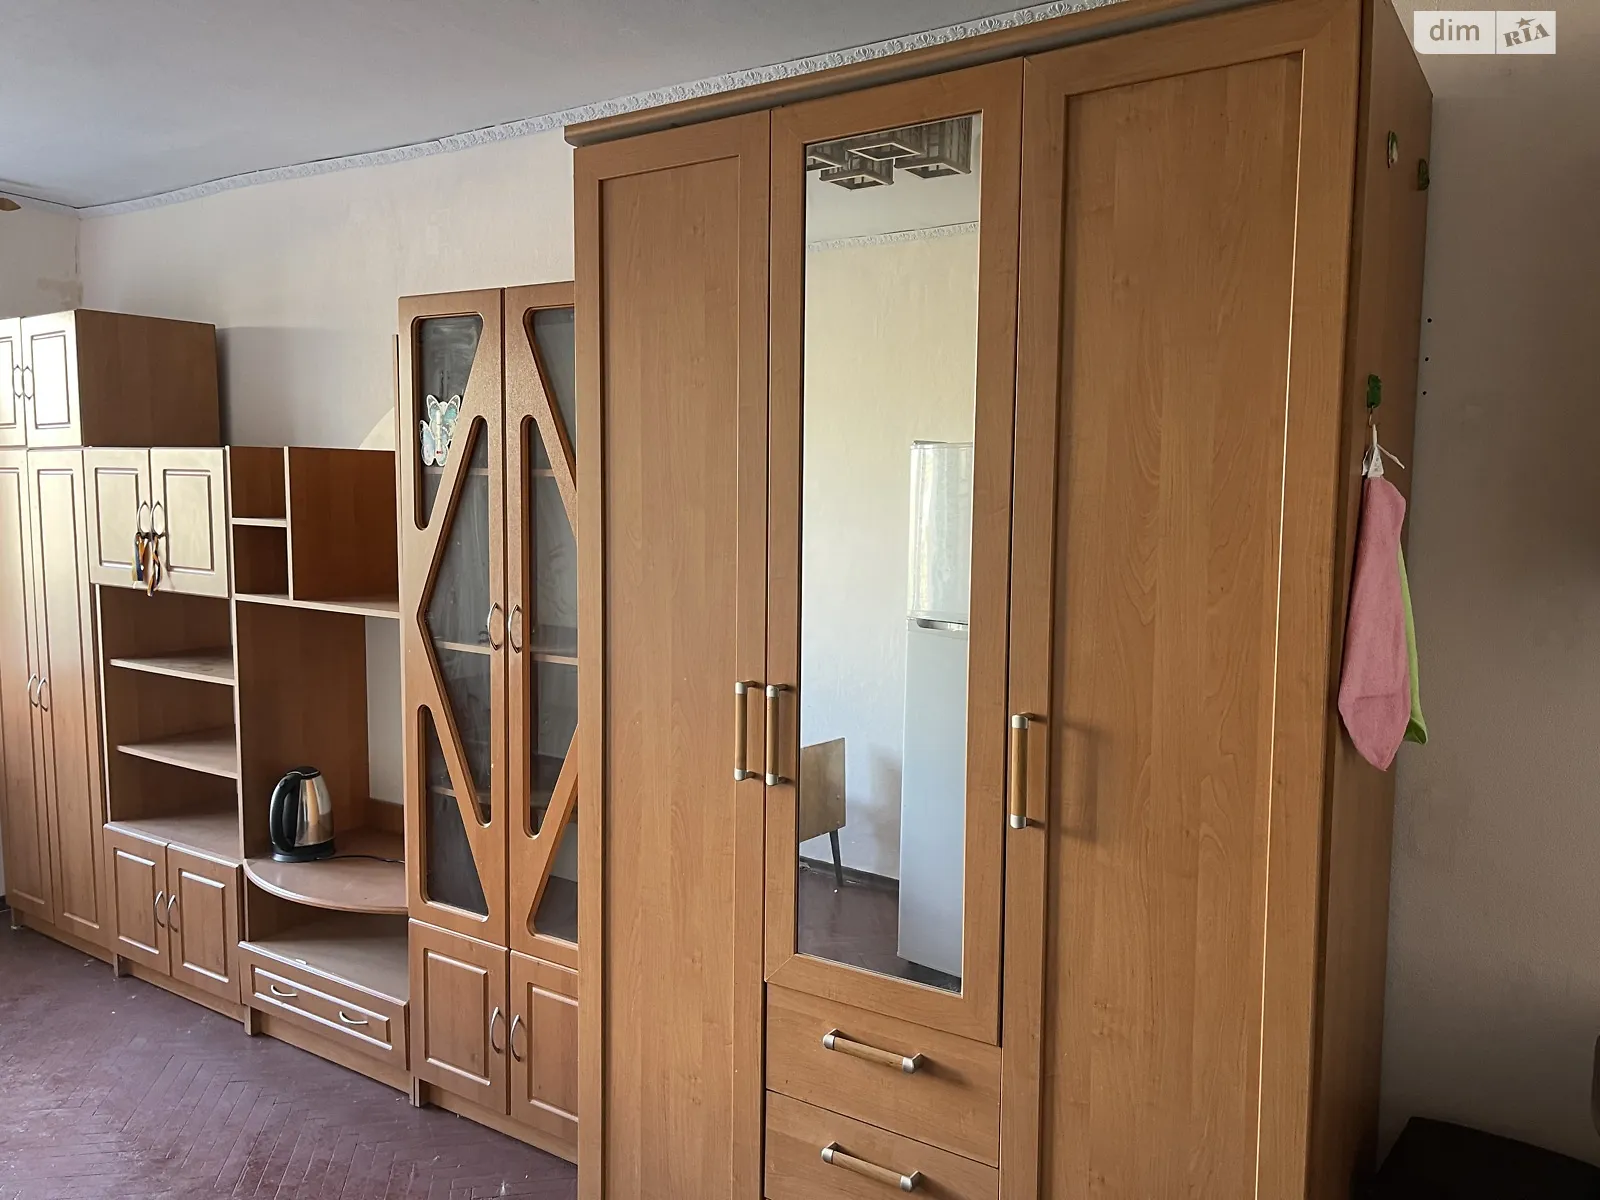 Продается комната 111 кв. м в Киеве, цена: 11500 $ - фото 1